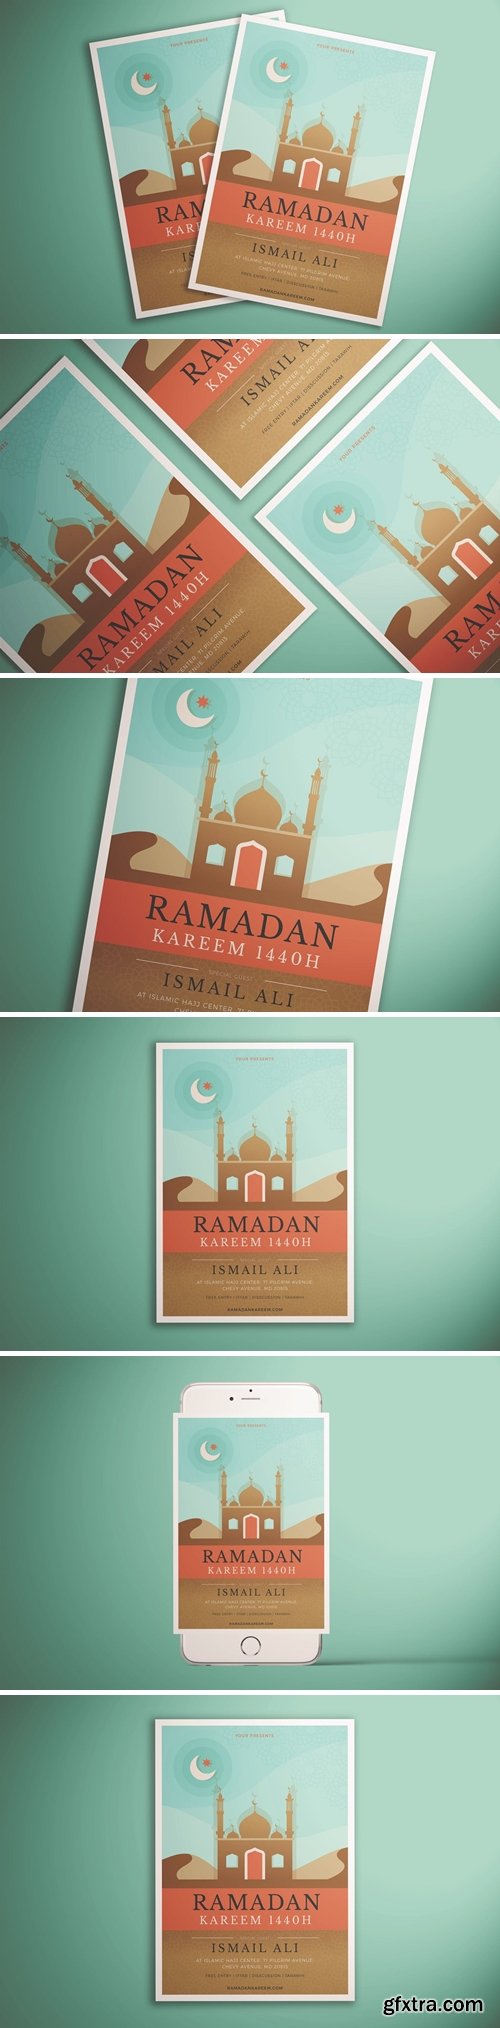 Ramadan Kareem Flyer Vol. 01